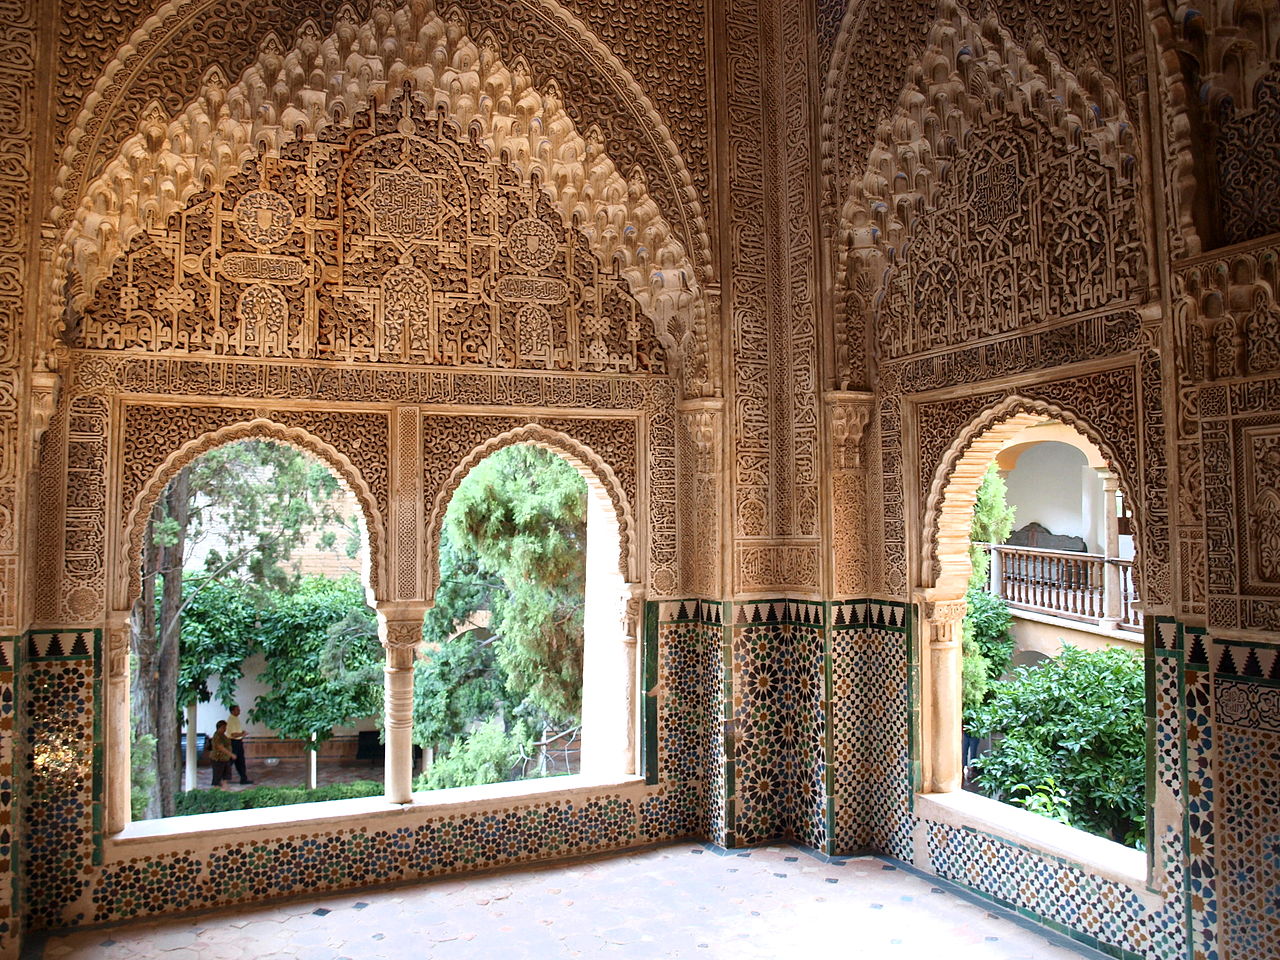 1280px-Lindaraja_window,_the_Liones_Palace,_Alhambra,_Granada.JPG